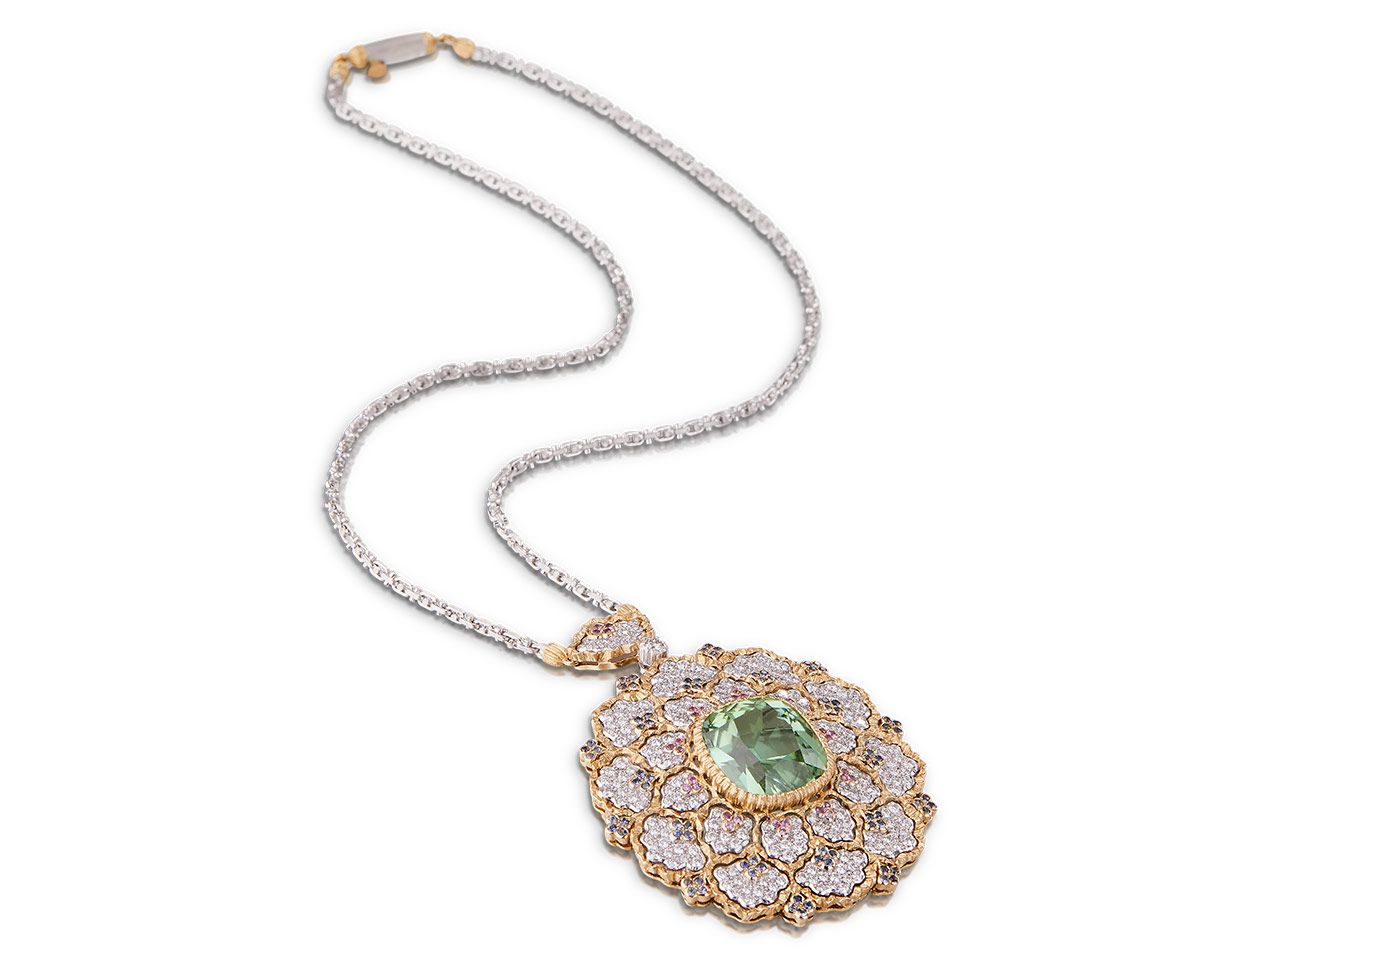 The Buccellati Euforbia pendant from the Il Giardino di Buccellati High Jewellery collection